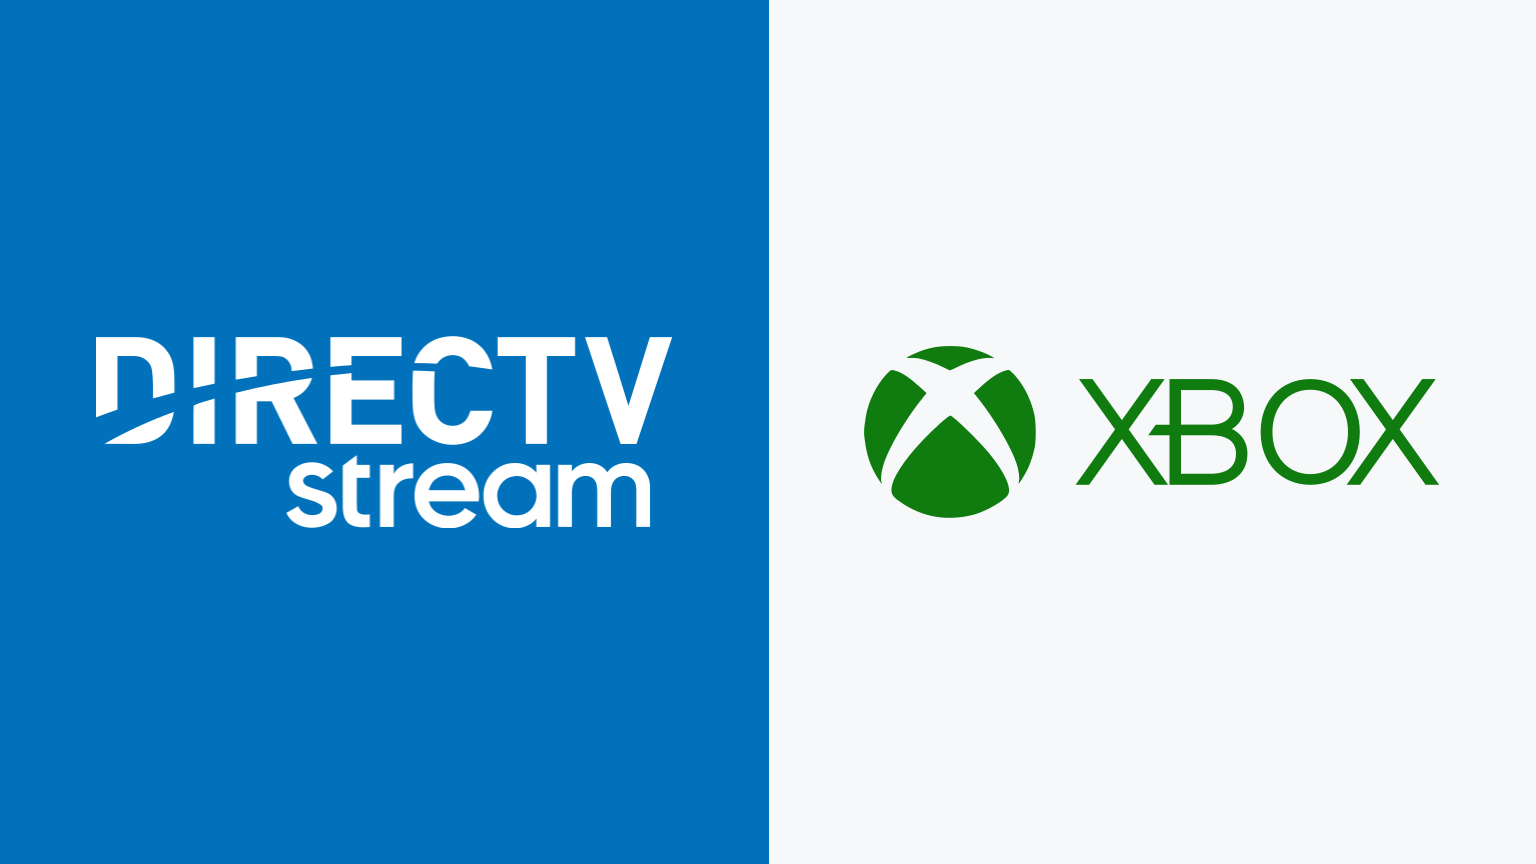 matchmaker stok Prestige How to Watch DIRECTV STREAM on Xbox – The Streamable